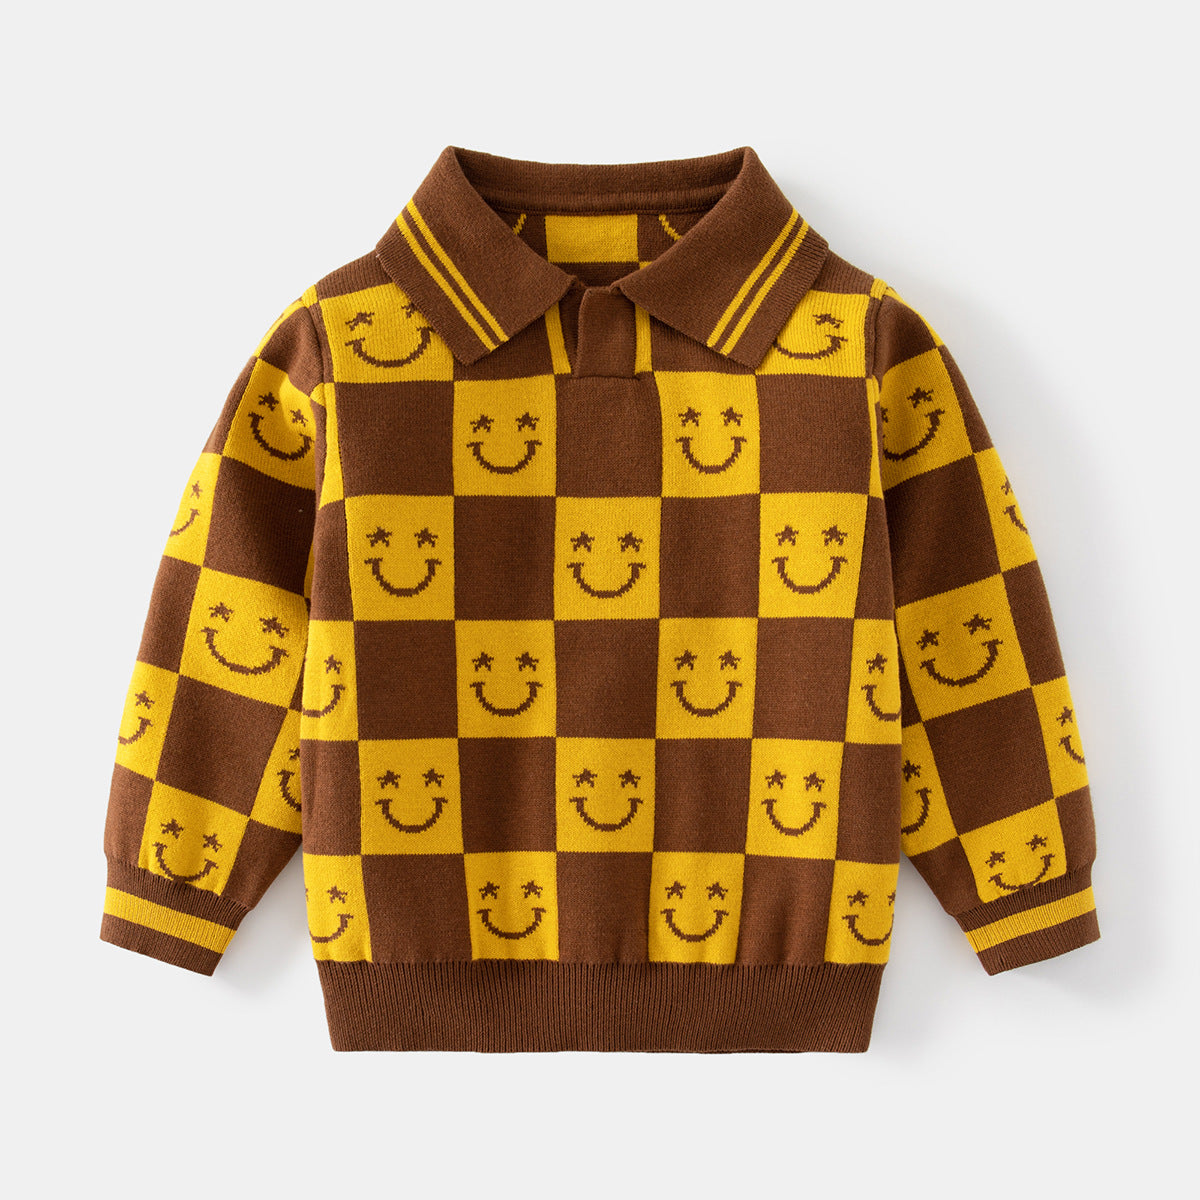 [513651] - Atasan Sweater Polo Kerah Lengan Panjang Import Anak Laki-Laki - Motif Square Smile